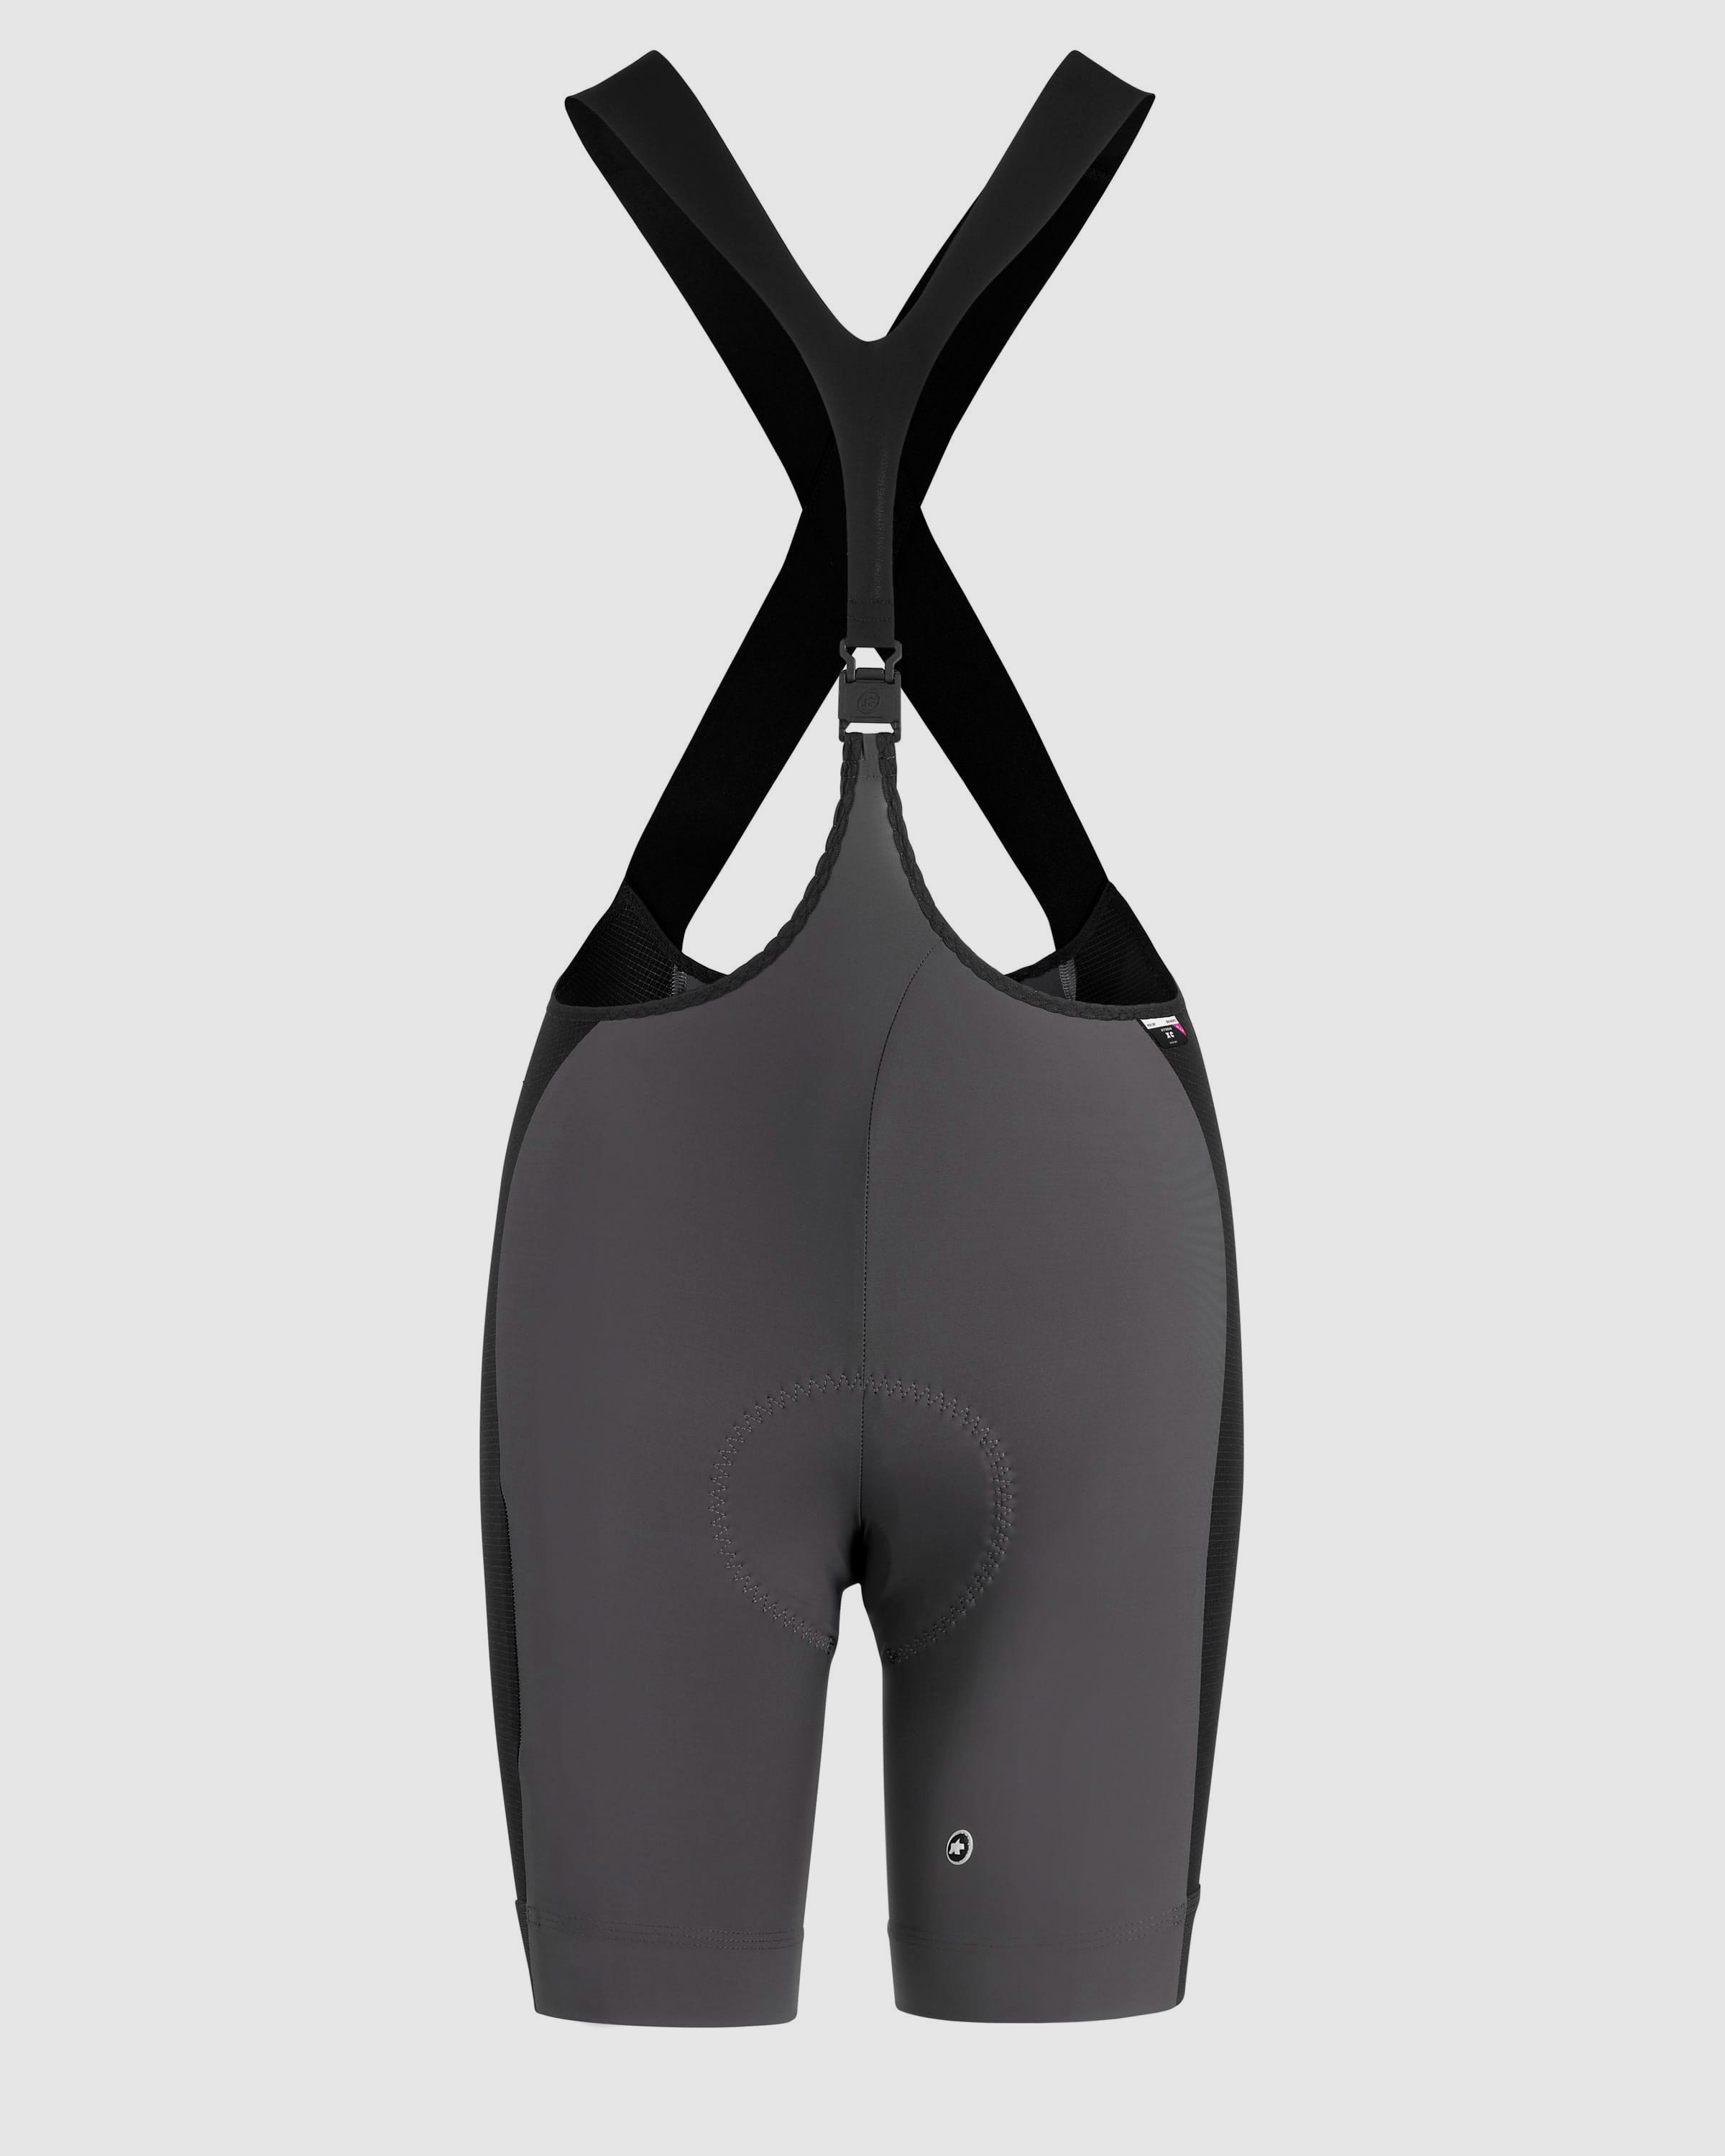 XC Women's Bib Shorts - ASSOS Of Switzerland - Official Outlet